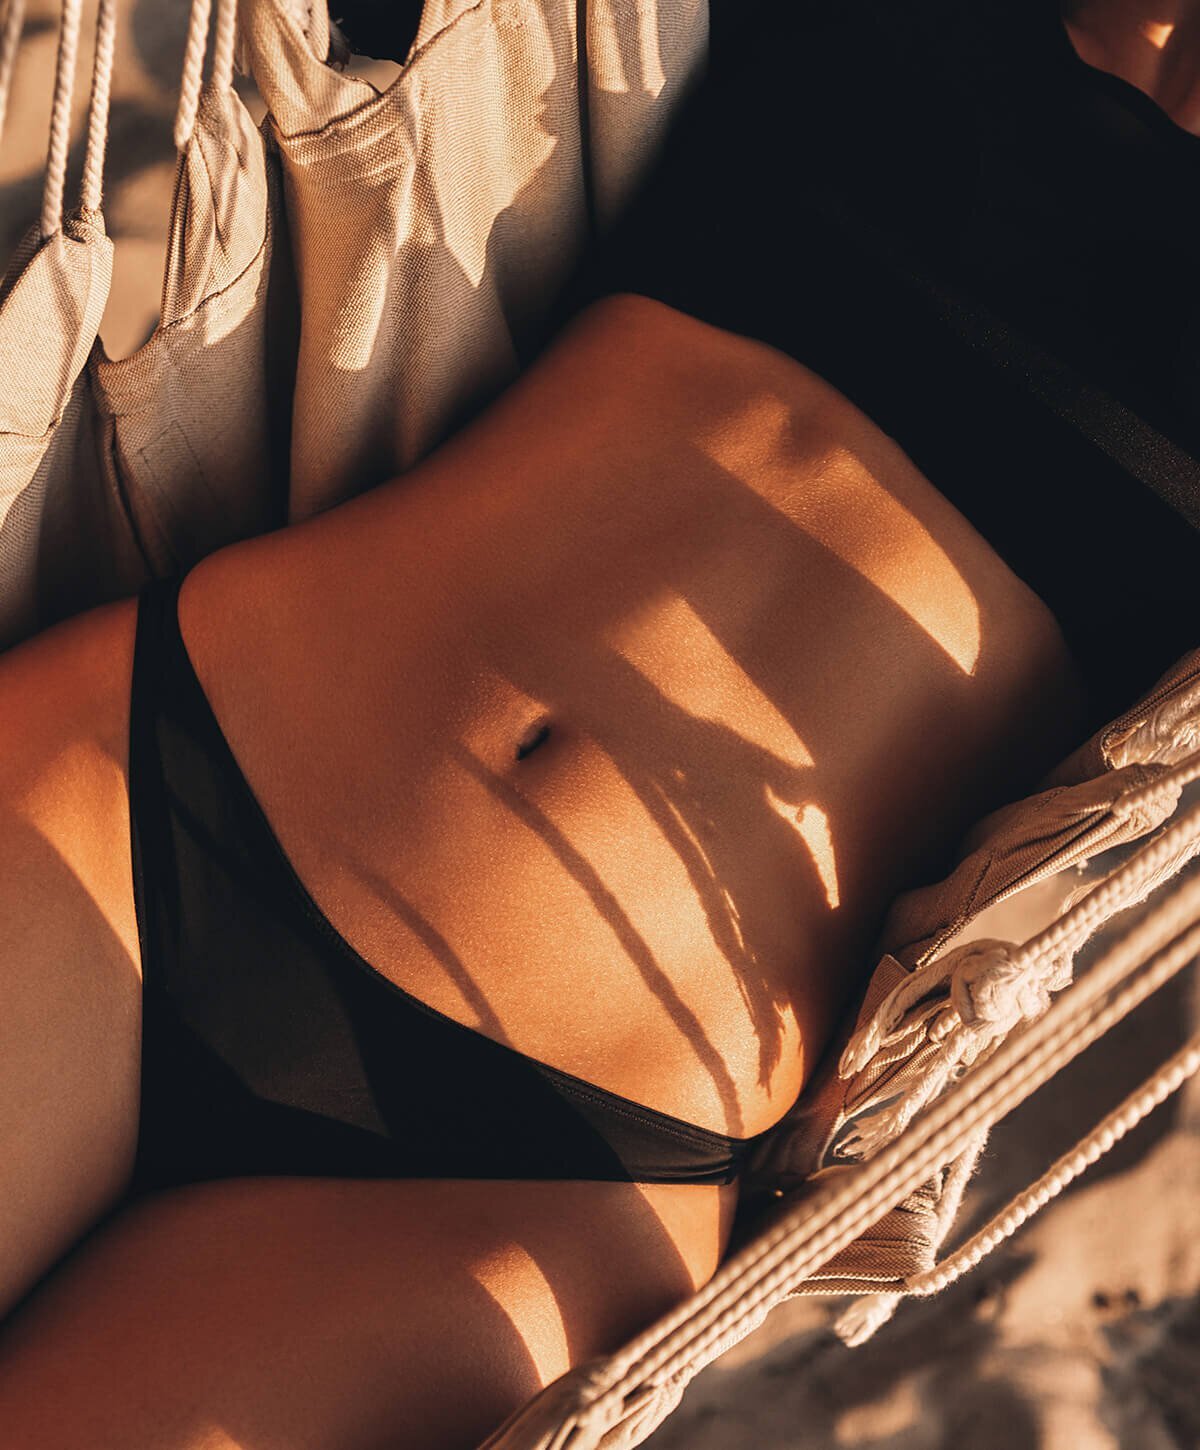 Miami bodytite model with black bikini